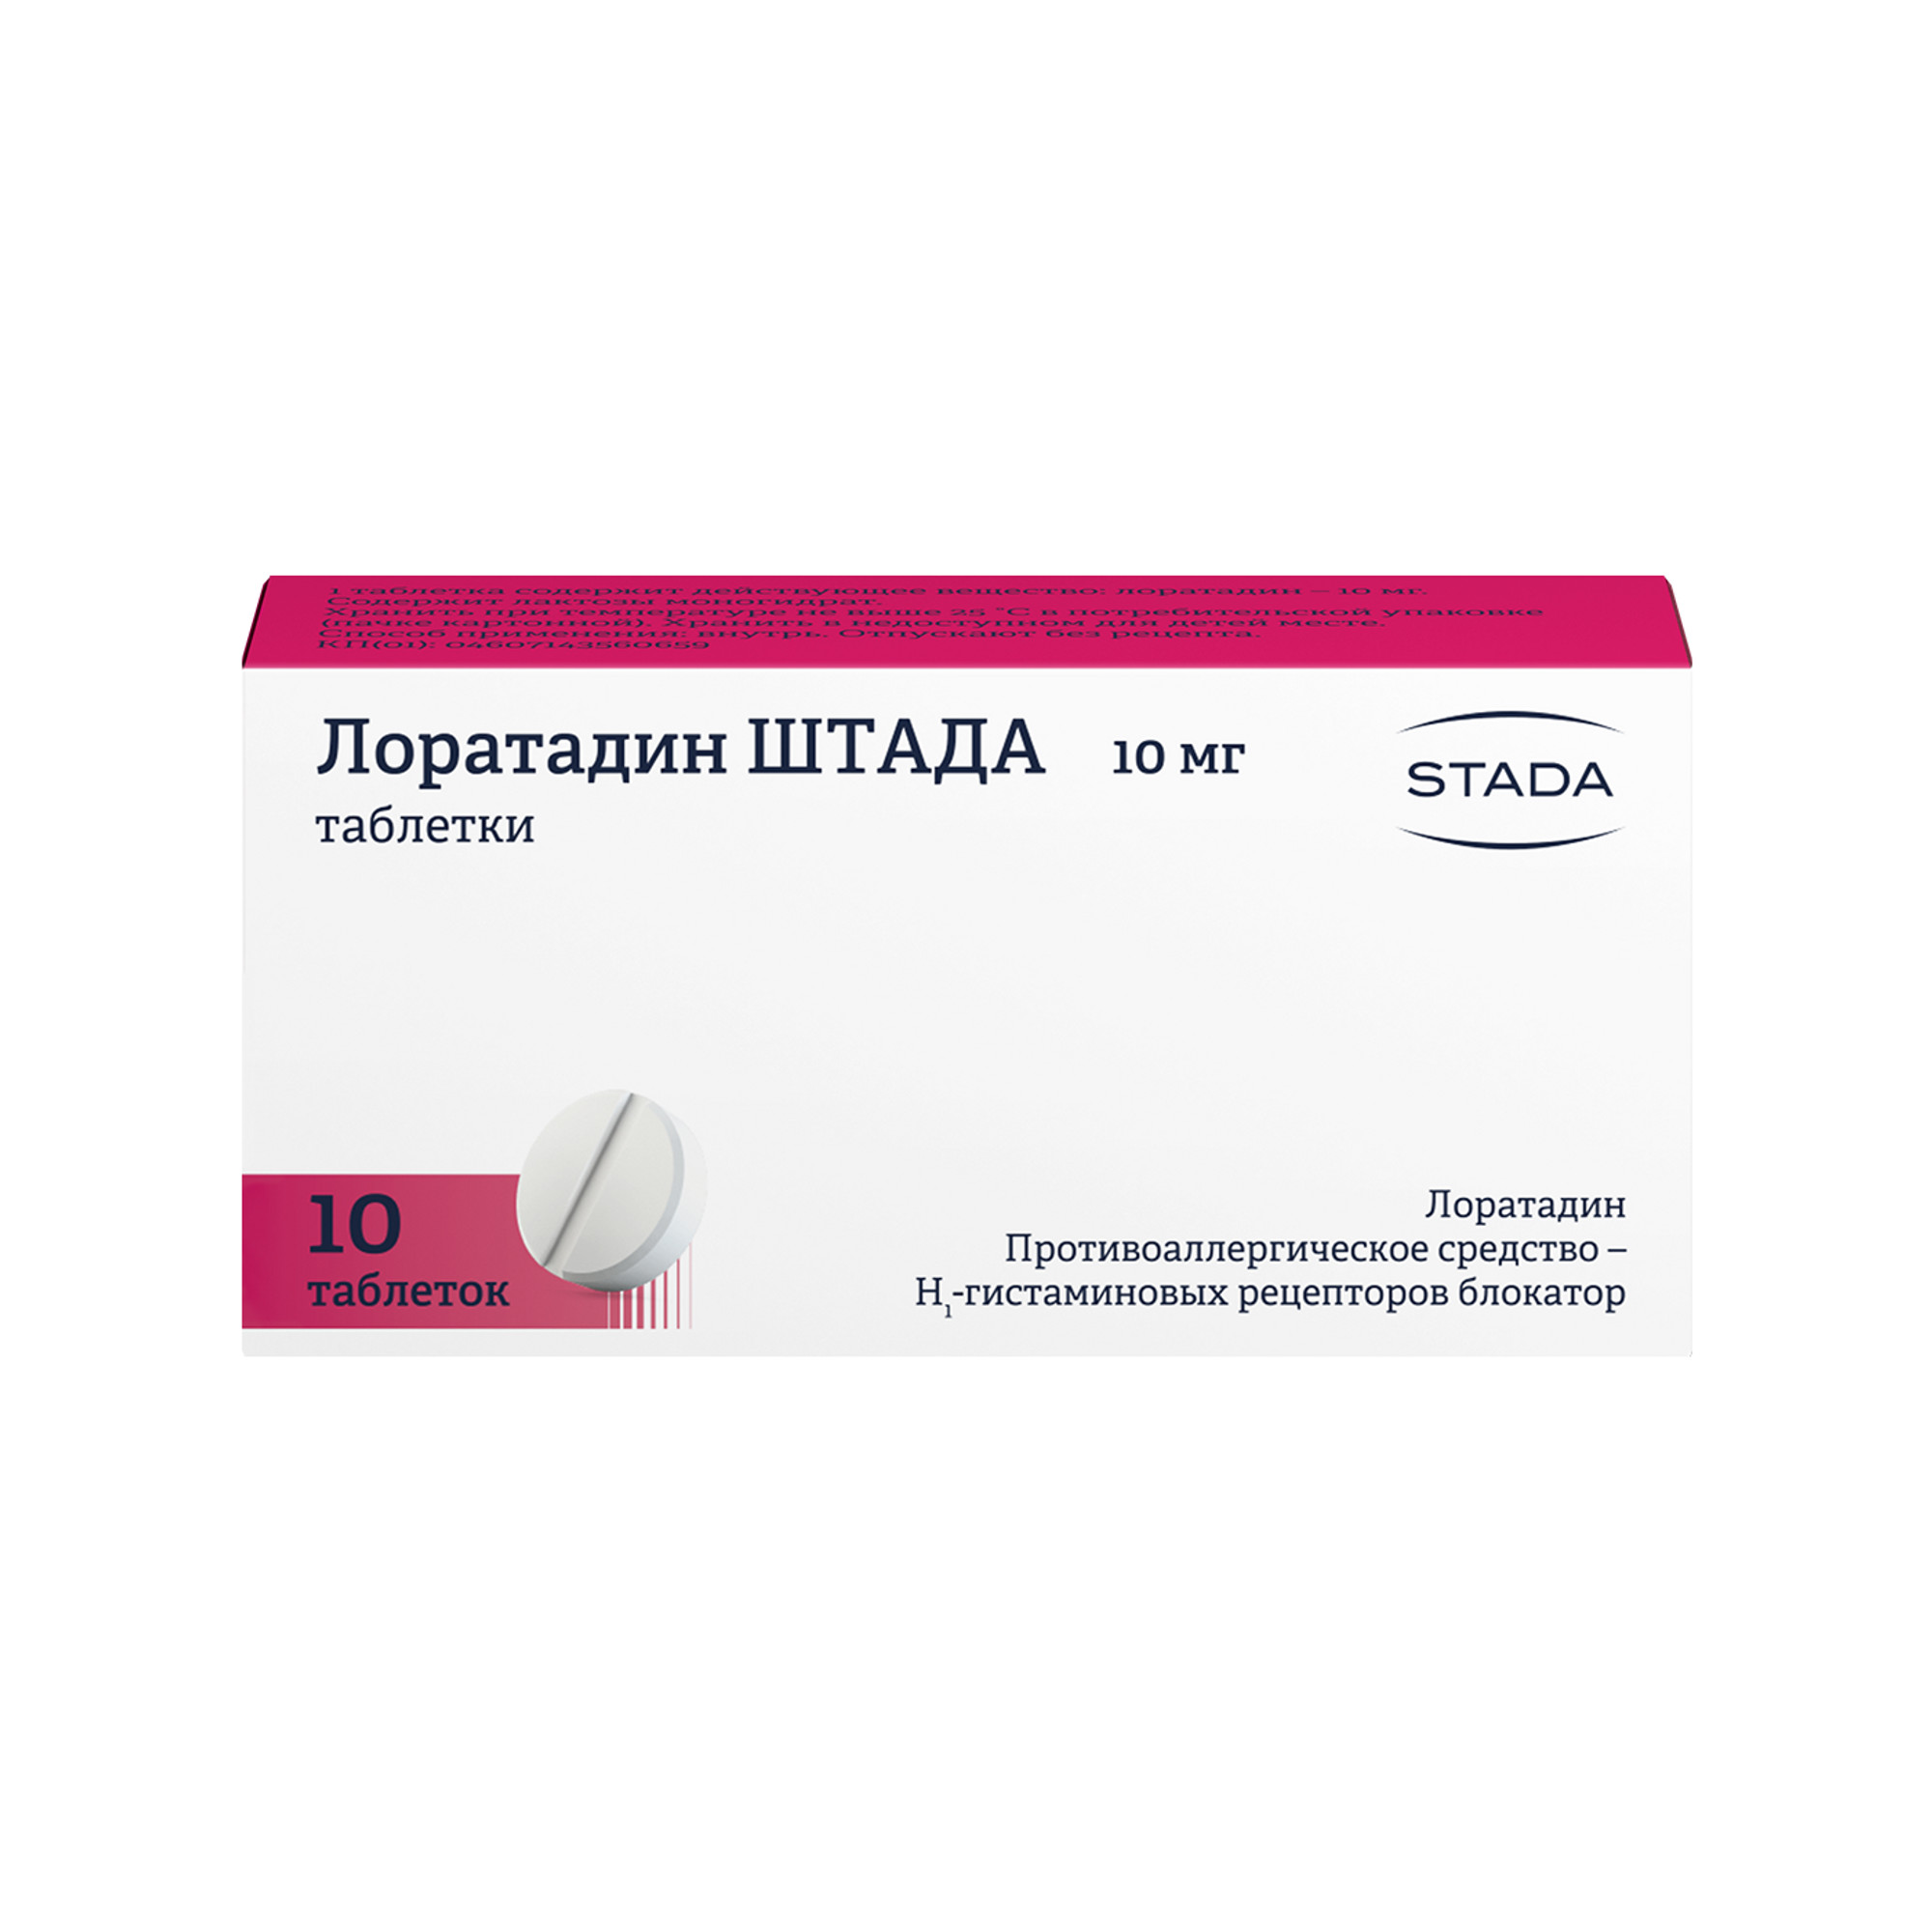 Лоратадин-Штада, таблетки 10 мг, 10 шт. лоратадин вертекс таблетки 10 мг 10 шт